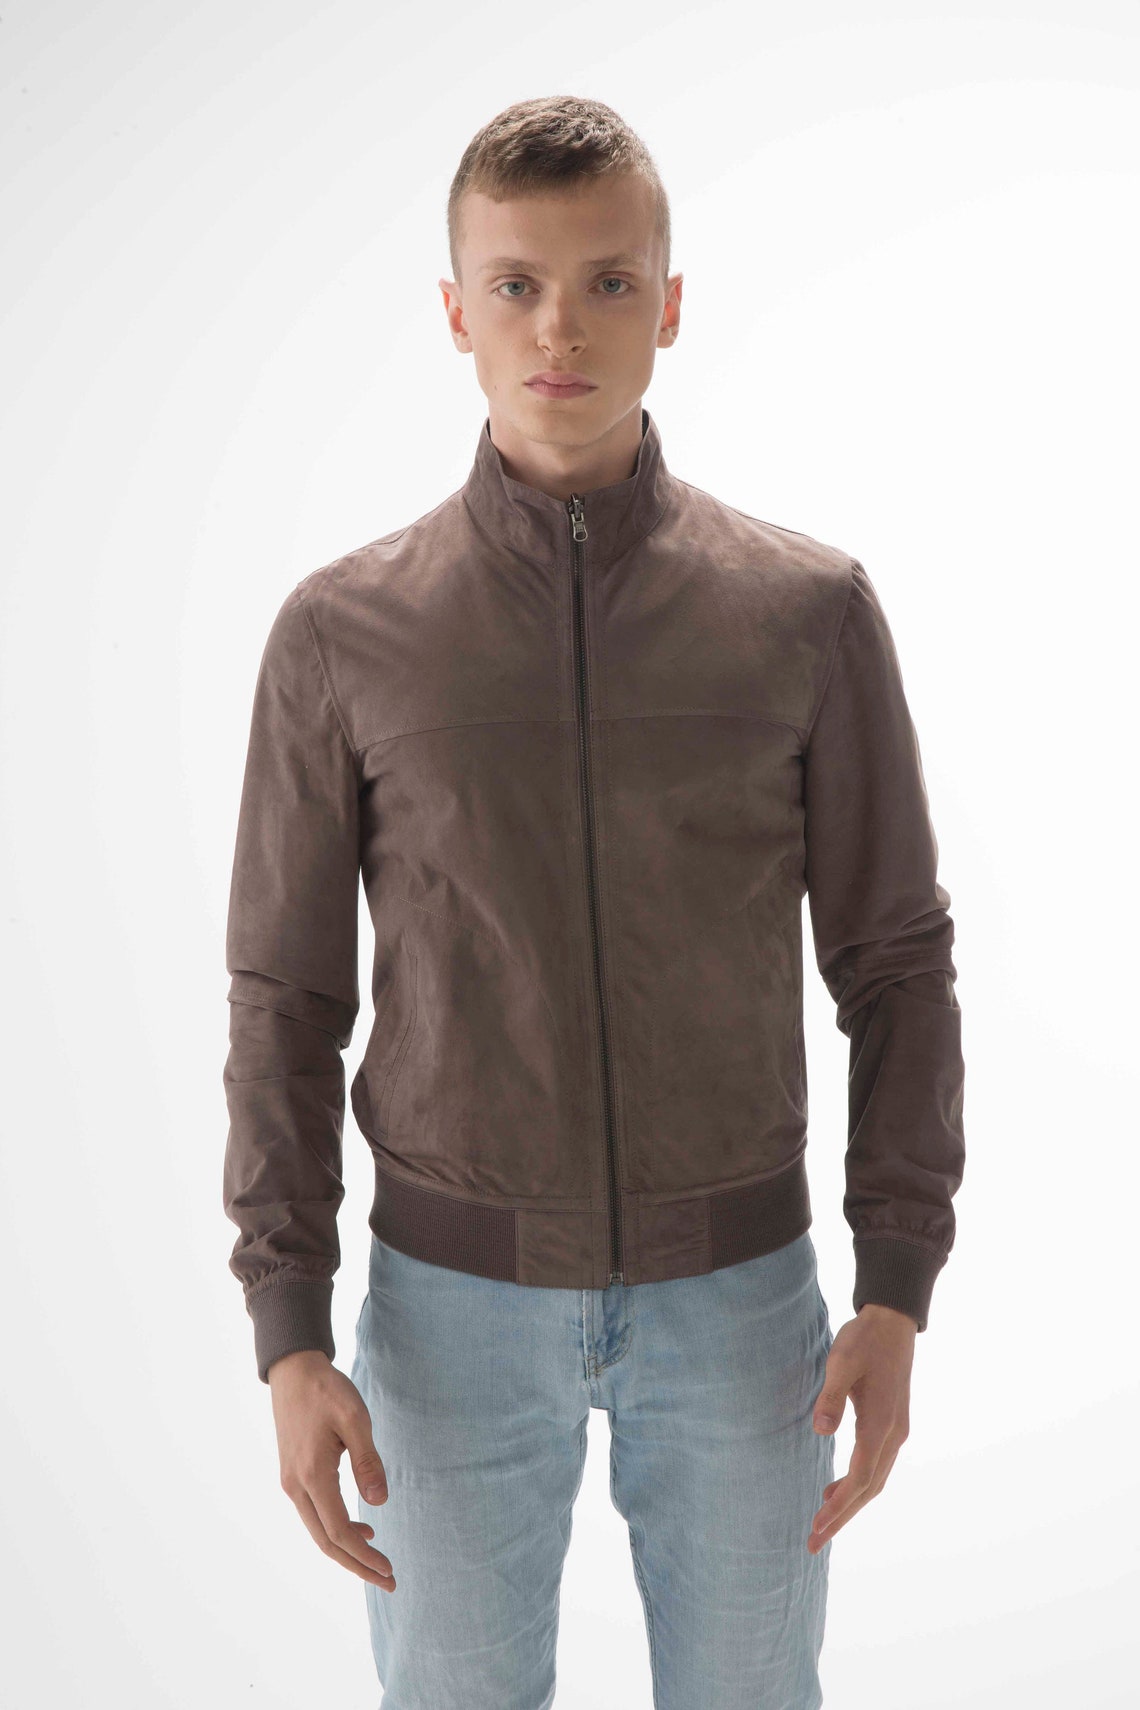 Comfortable Double Sided Man Leather Jacket | Etsy